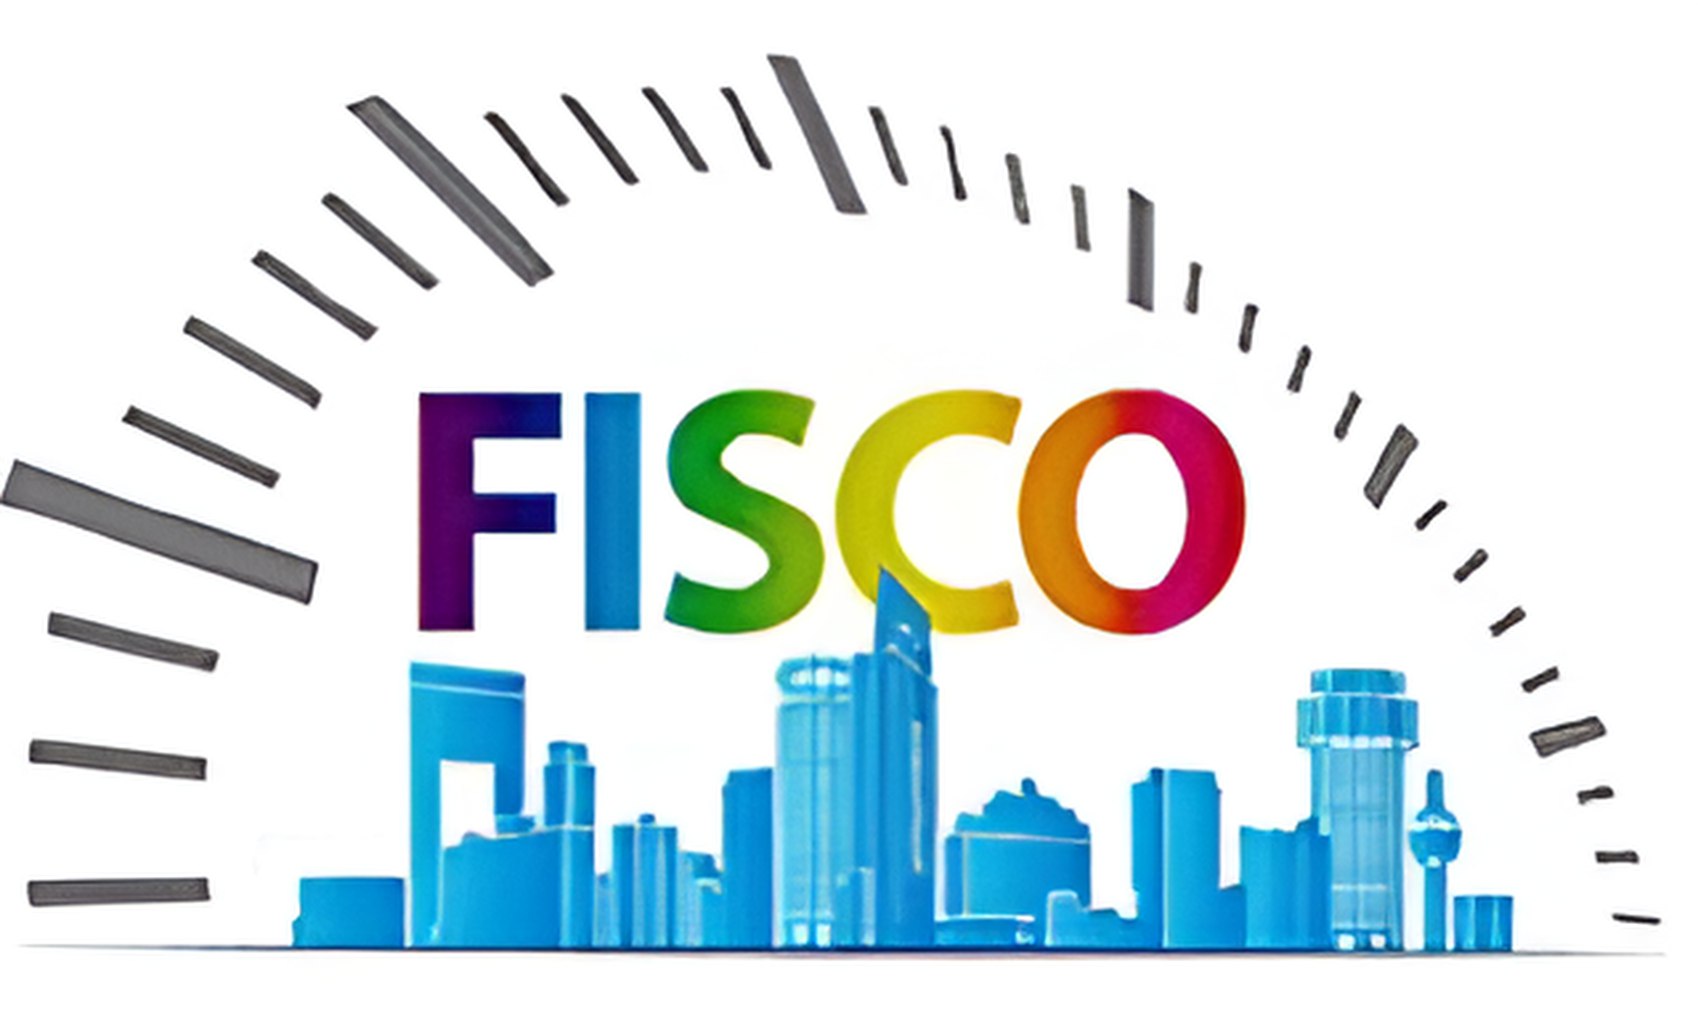 Fisco | Fundamental Isolation System Co. Ltd